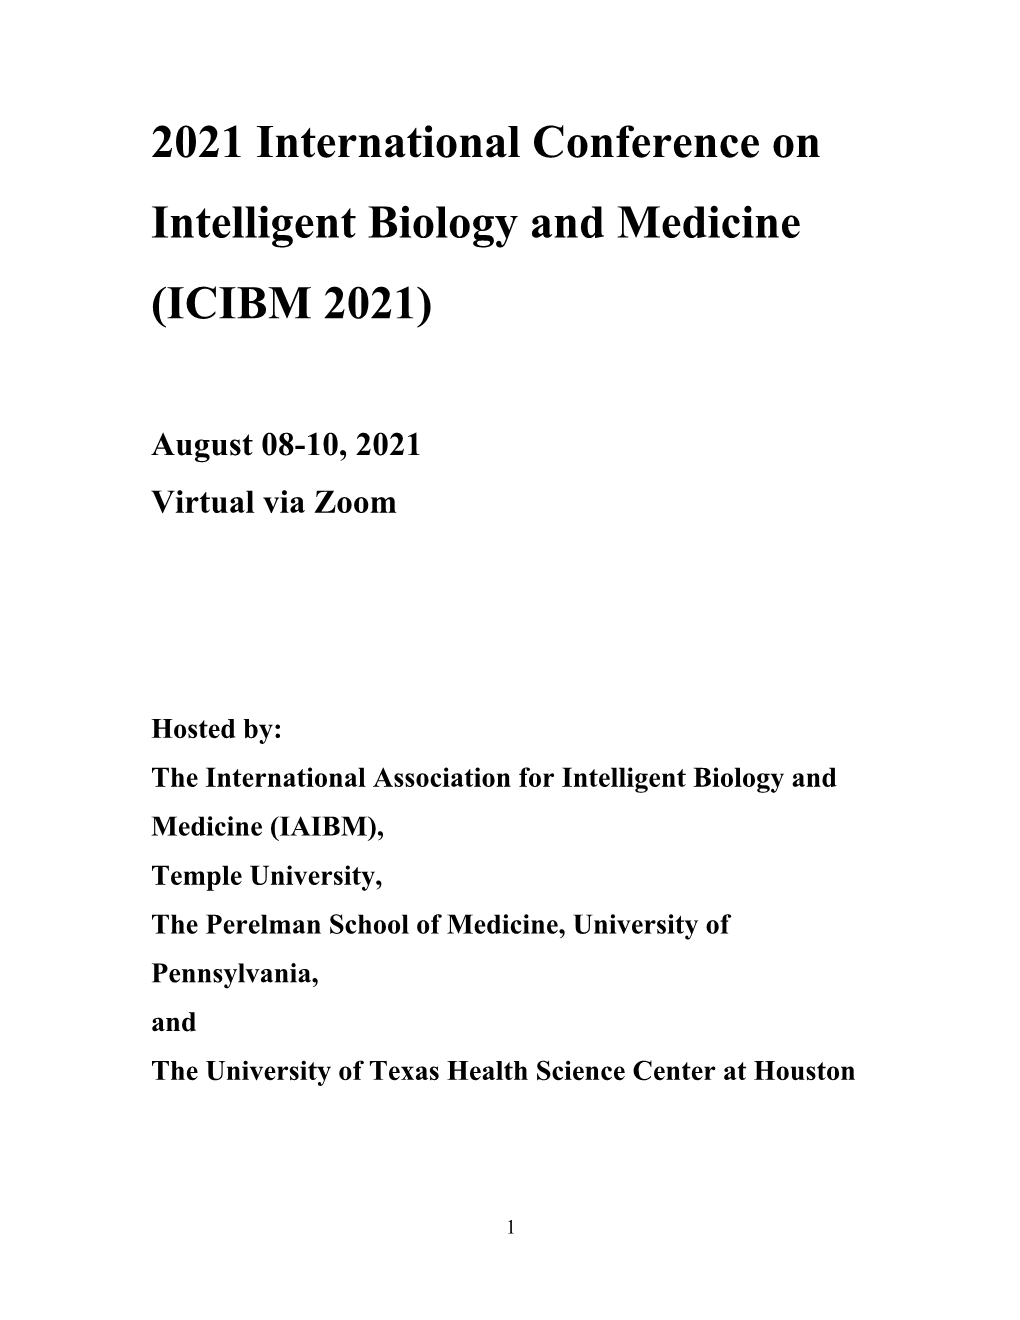 2021 International Conference on Intelligent Biology and Medicine (ICIBM 2021)